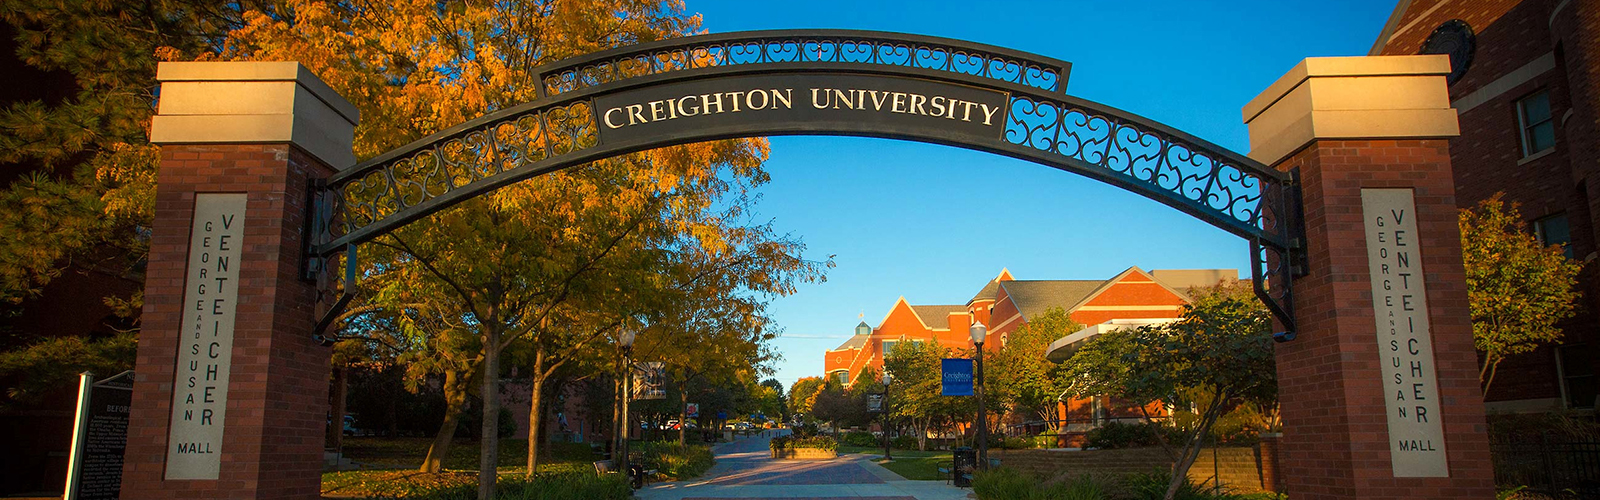 Creighton University plans $75 M medical school facility